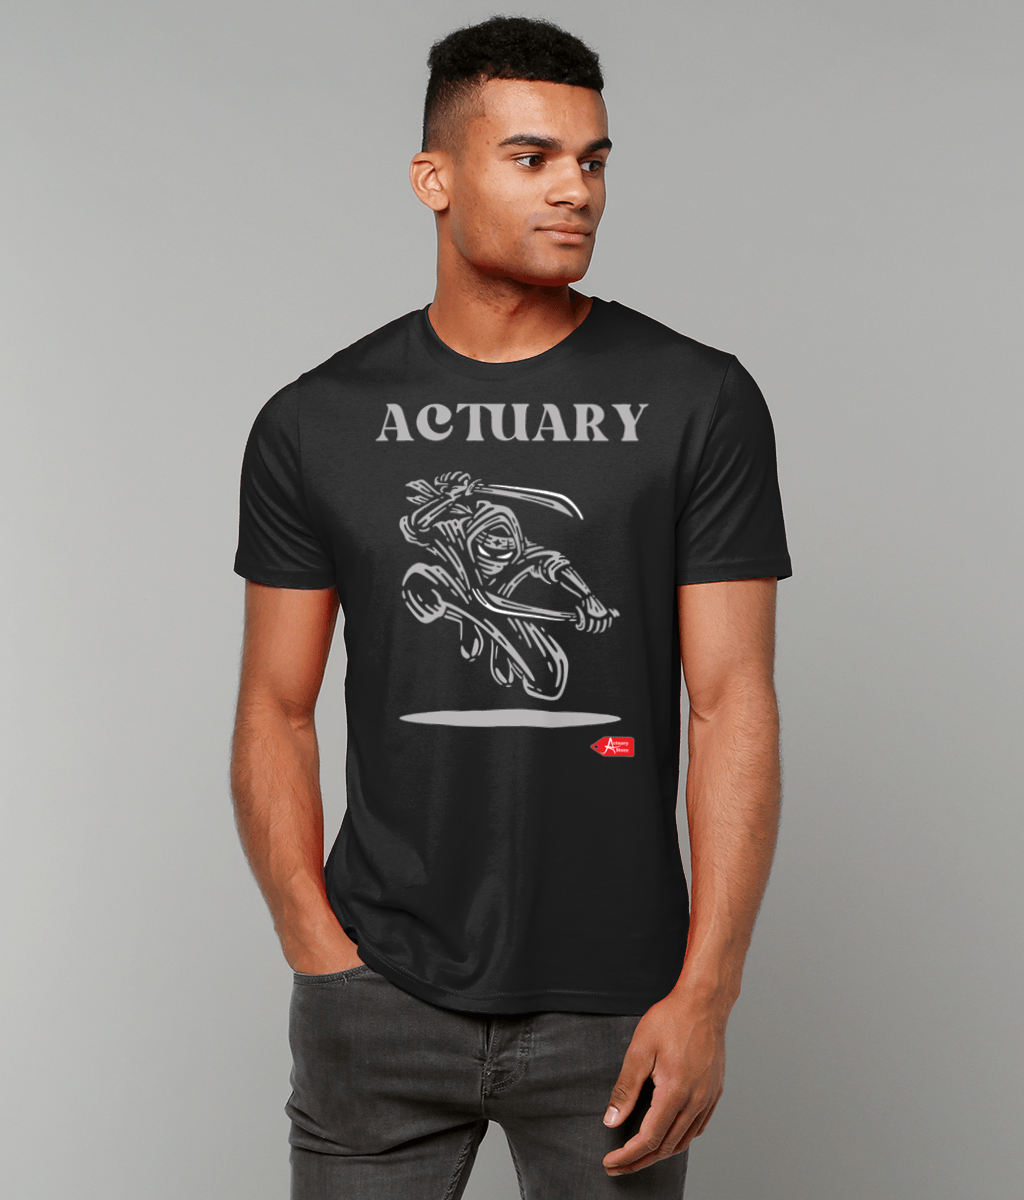 Actuary Black and Grey Illustrative Ninja Black T-Shirt